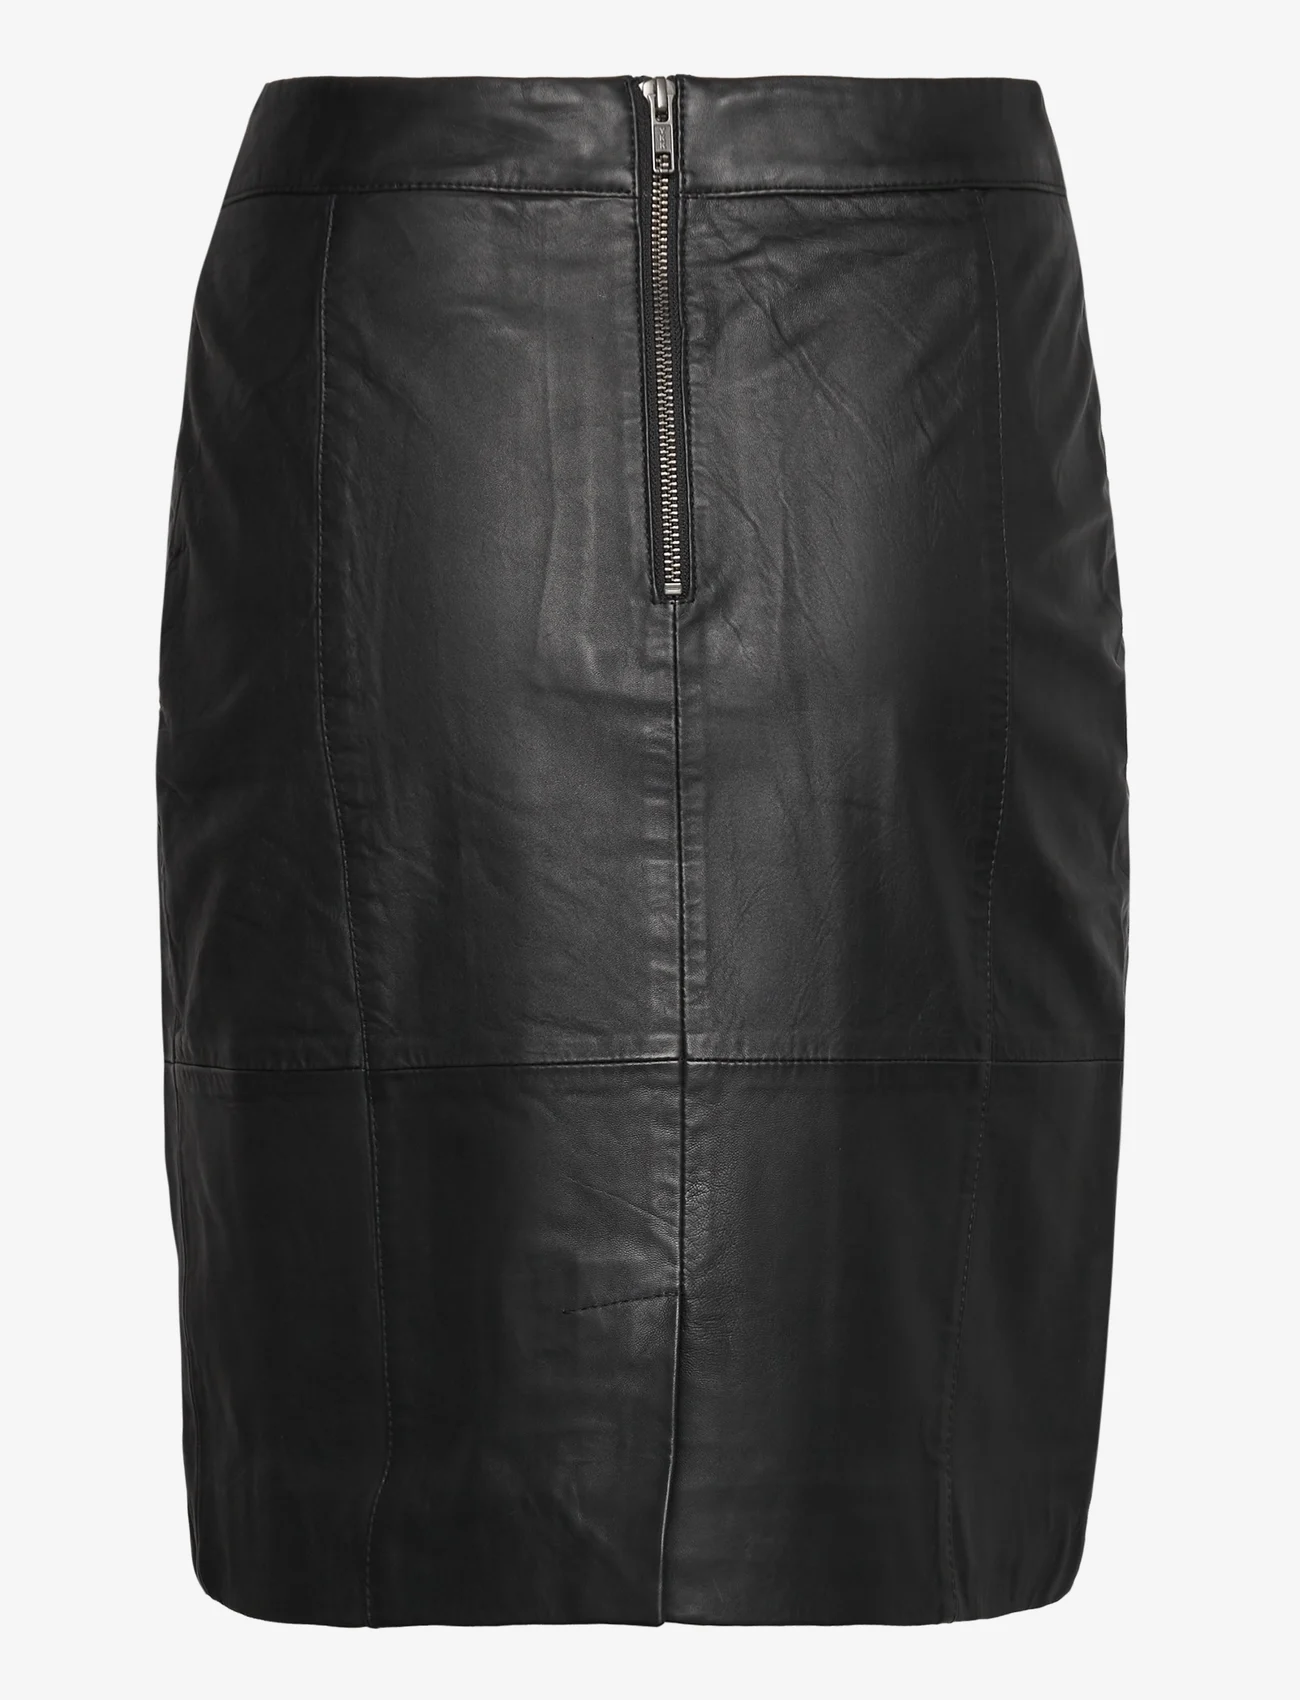 DEPECHE - DicteDEP Leather Skirt - nederdele i læder - black - 1